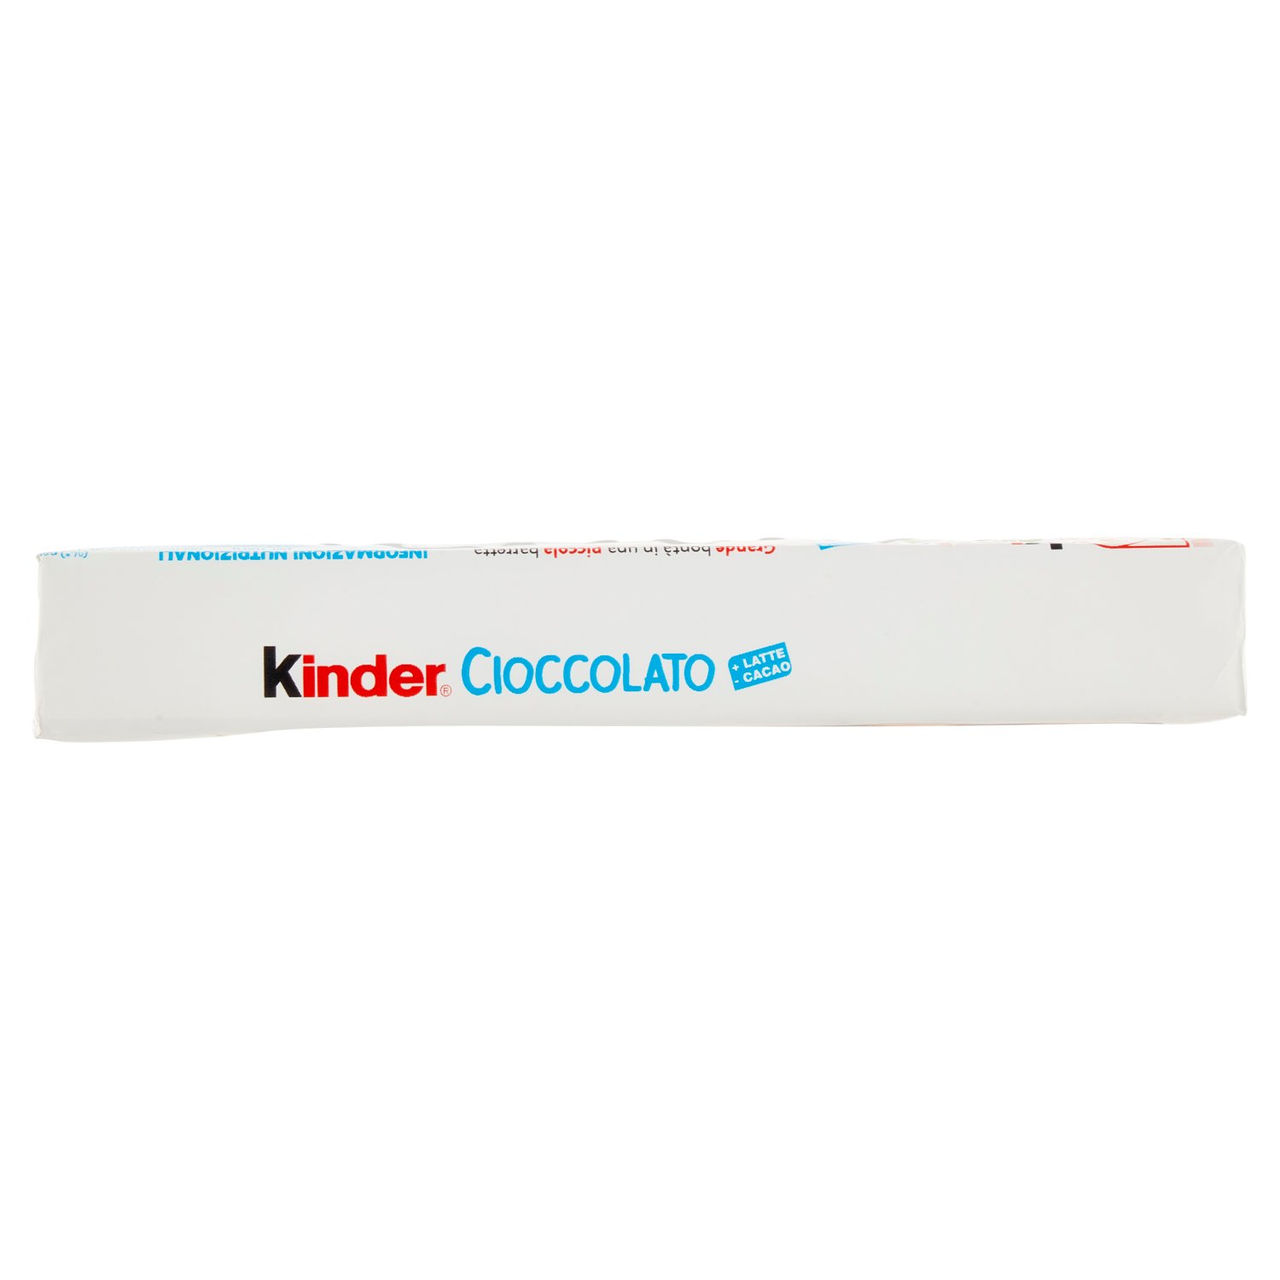 Kinder Cioccolato 16 x 12,5 g in vendita online